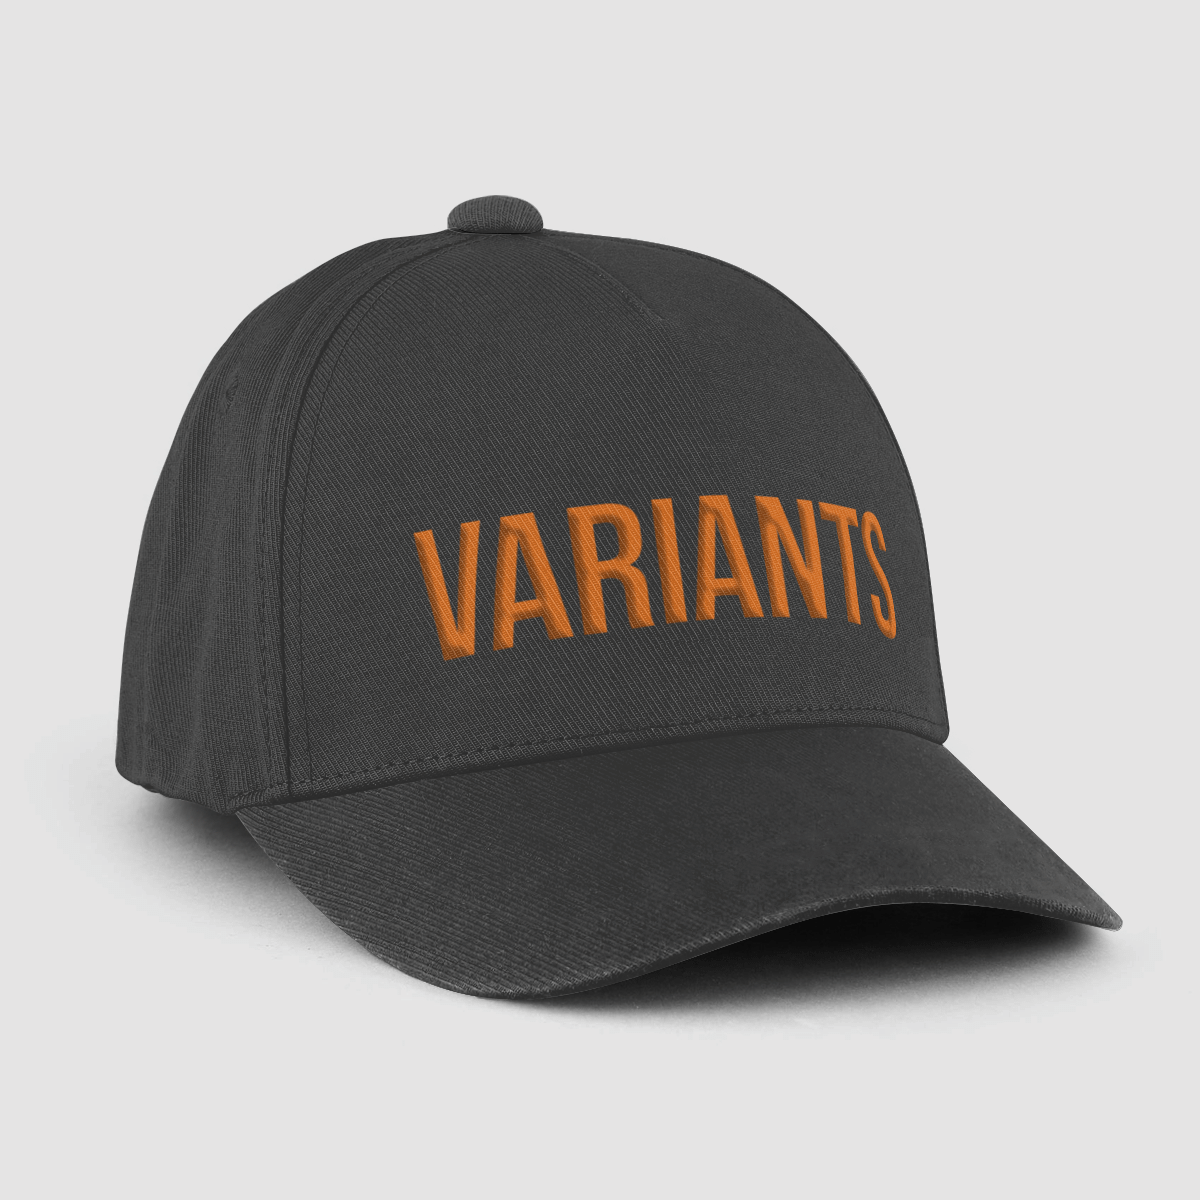 Variant Baseball Cap Hats Style: Baseball Cap, Color: All over print